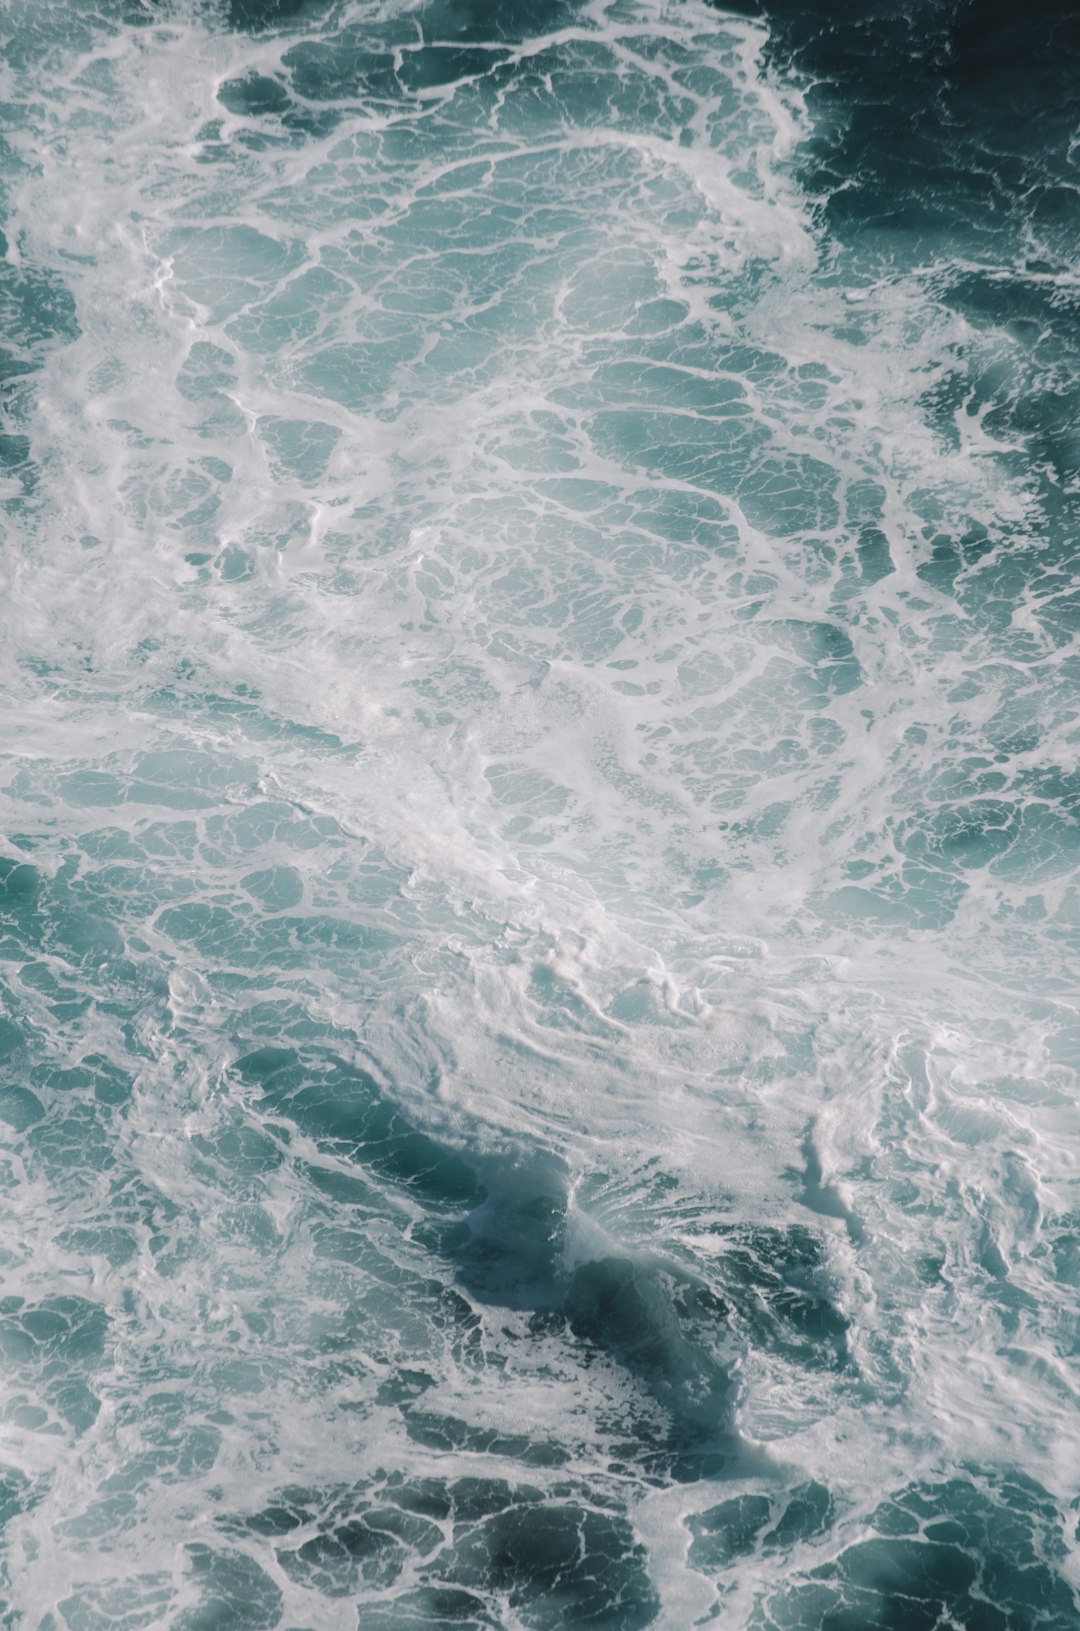 500+ Atlantic Ocean Pictures [Stunning!] | Download Free Images on Unsplash